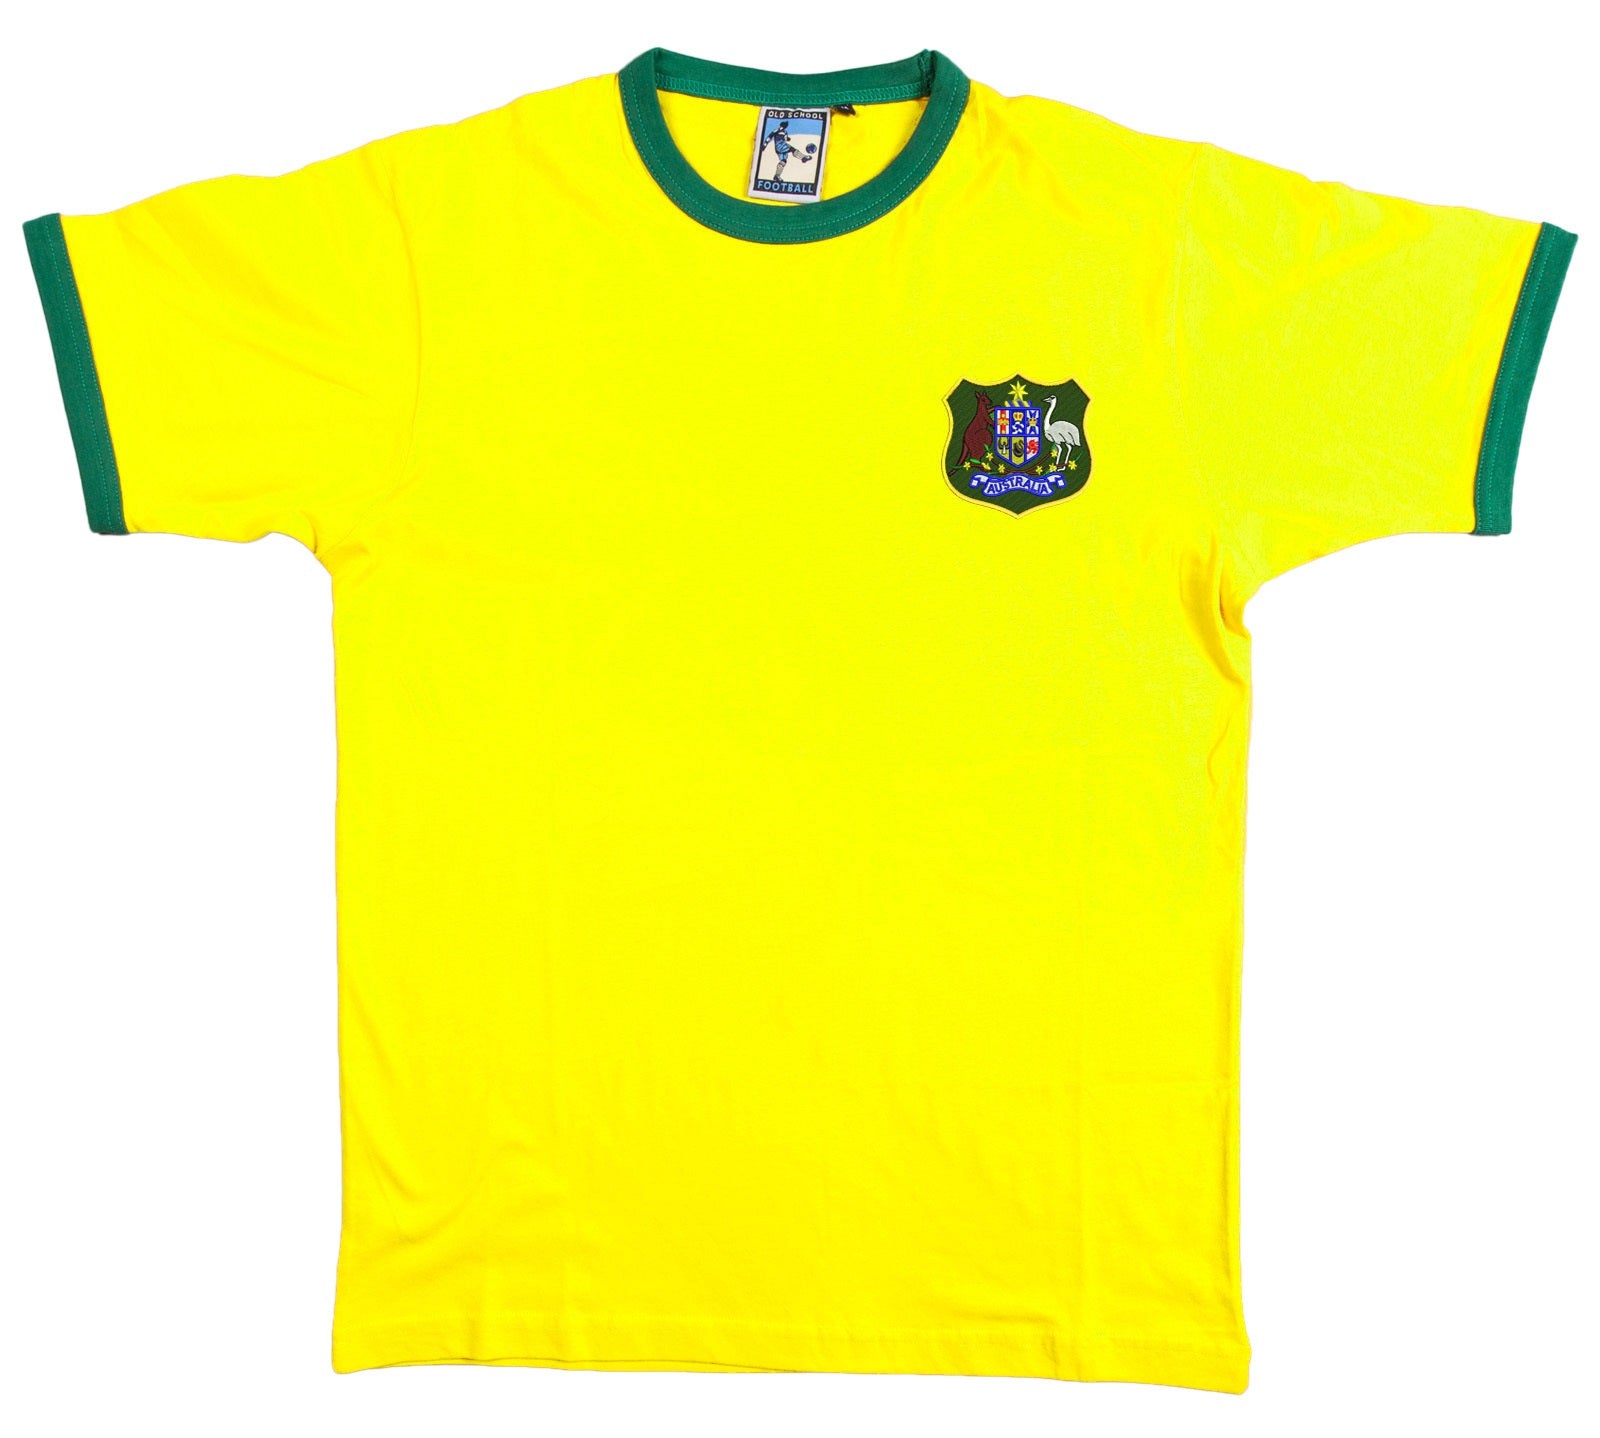 Australia Rugby Retro T Shirt 1970s - Old School Football